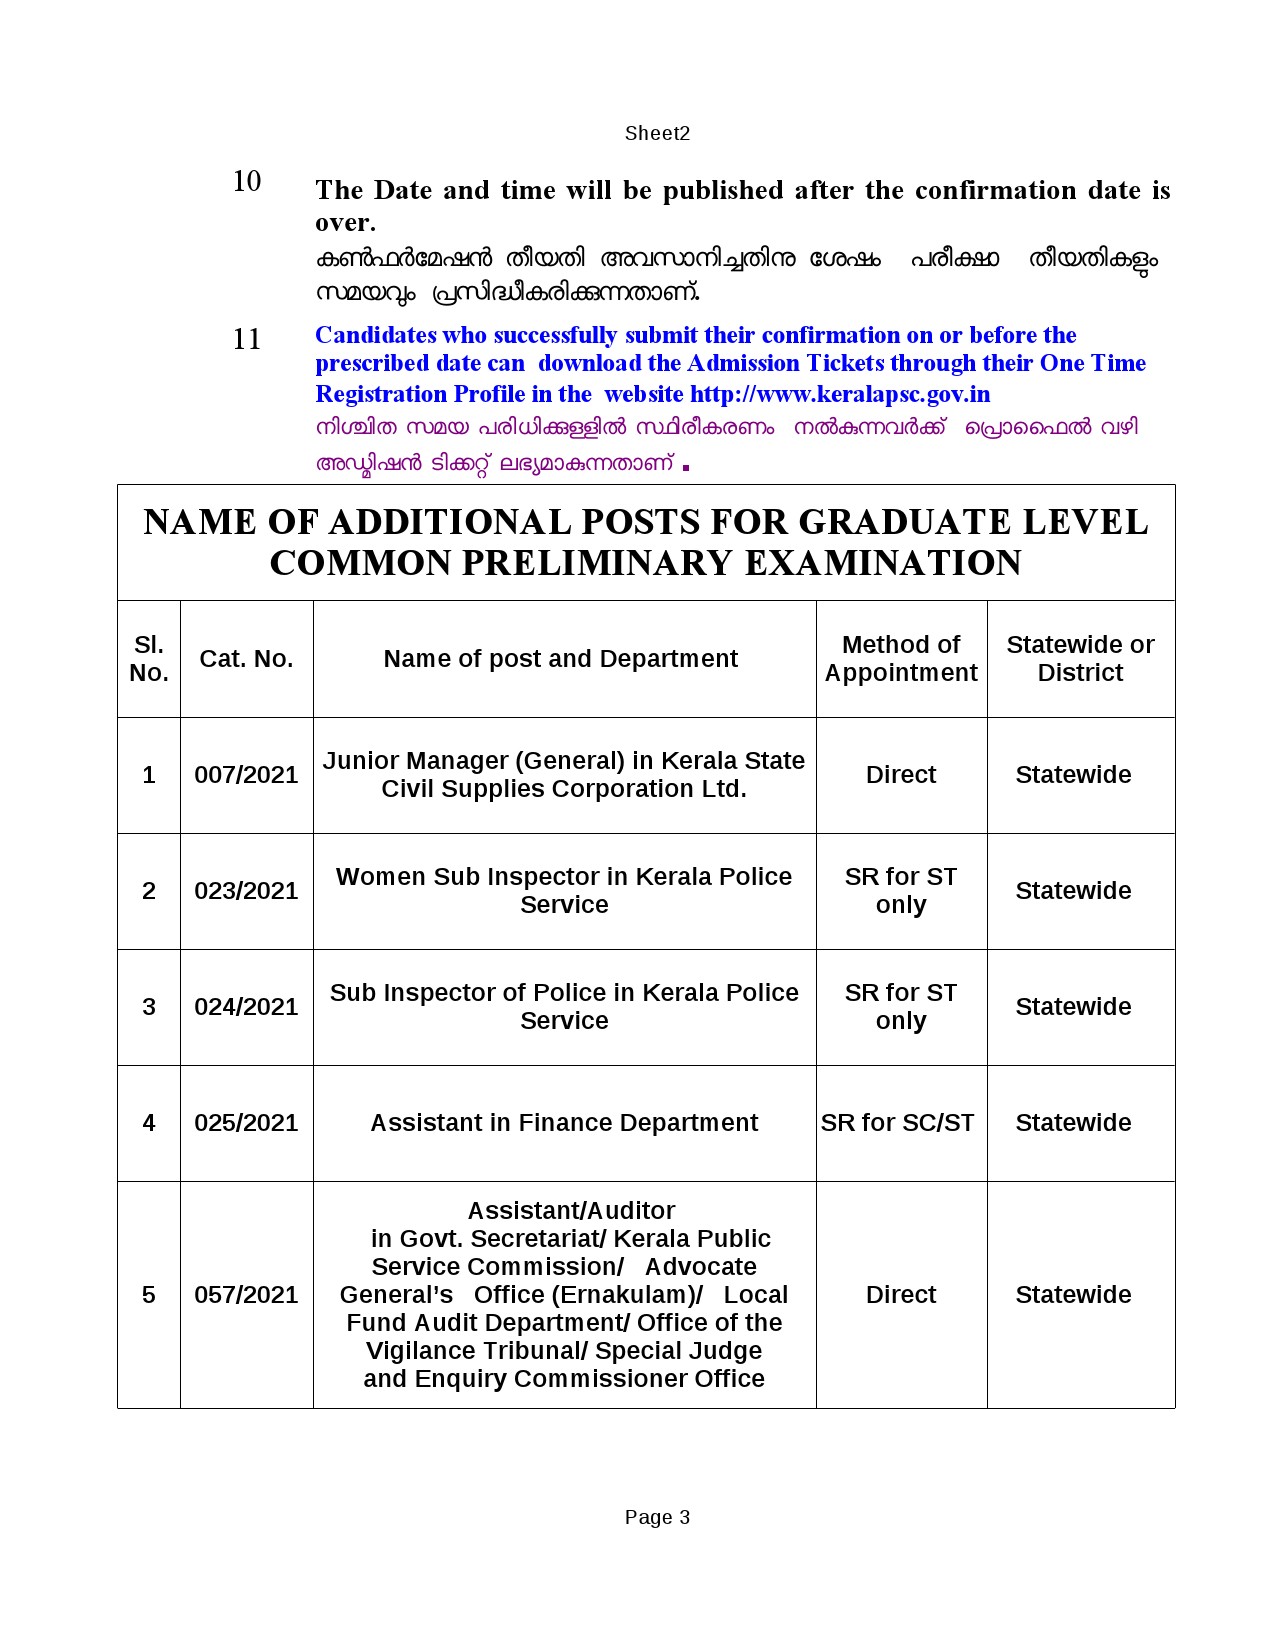 Additional Exam Graduate Level Common Prelims Exam Sept 2021 - Notification Image 3